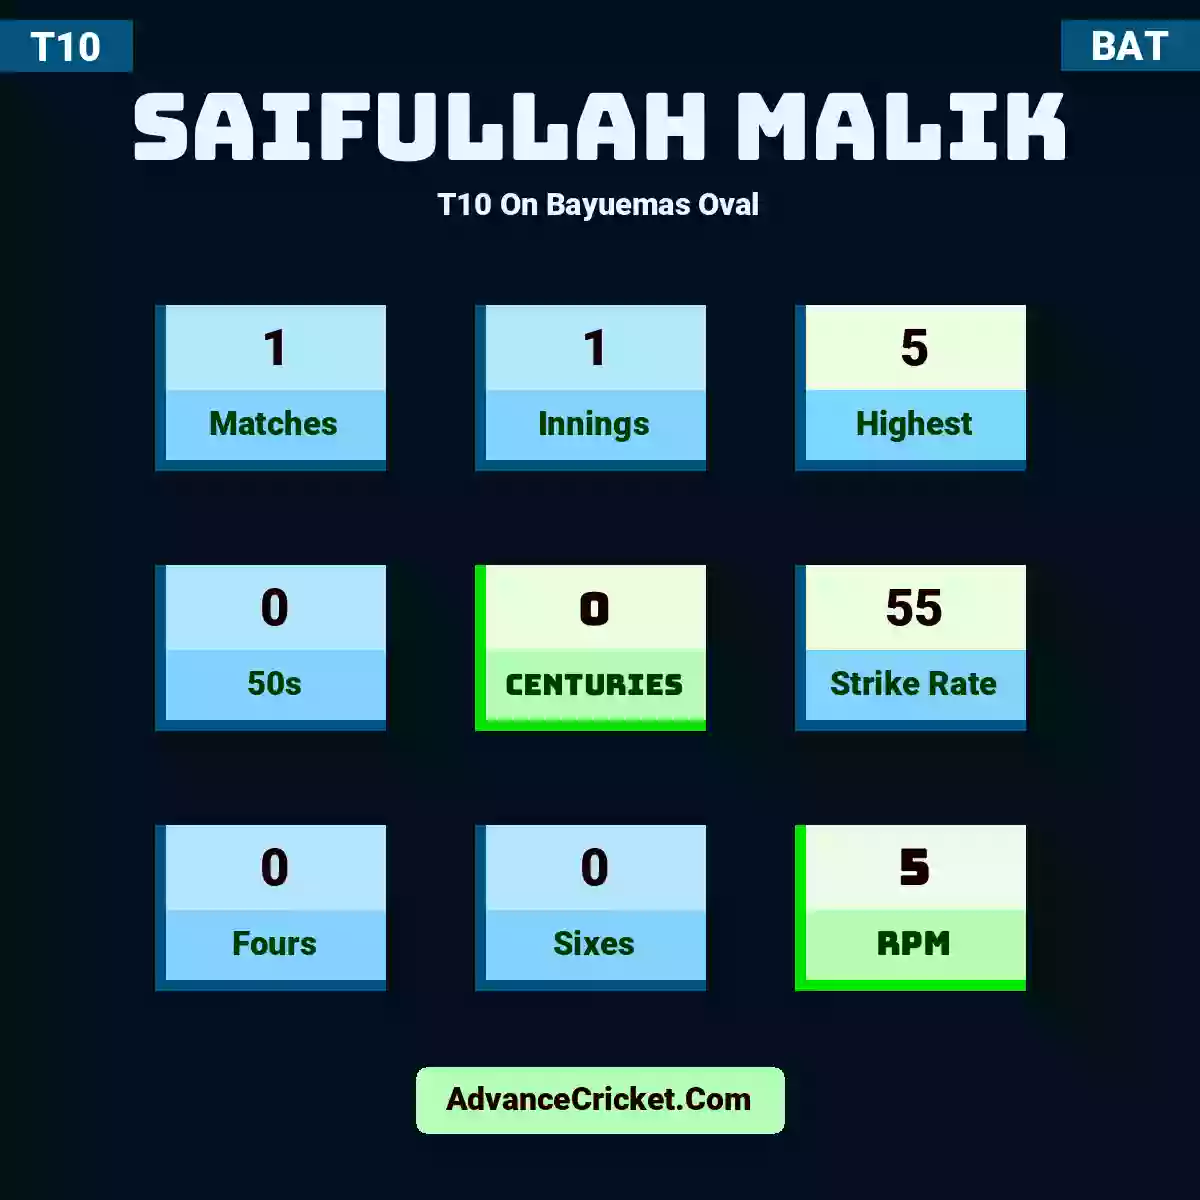 Saifullah Malik T10  On Bayuemas Oval, Saifullah Malik played 1 matches, scored 5 runs as highest, 0 half-centuries, and 0 centuries, with a strike rate of 55. S.Malik hit 0 fours and 0 sixes, with an RPM of 5.